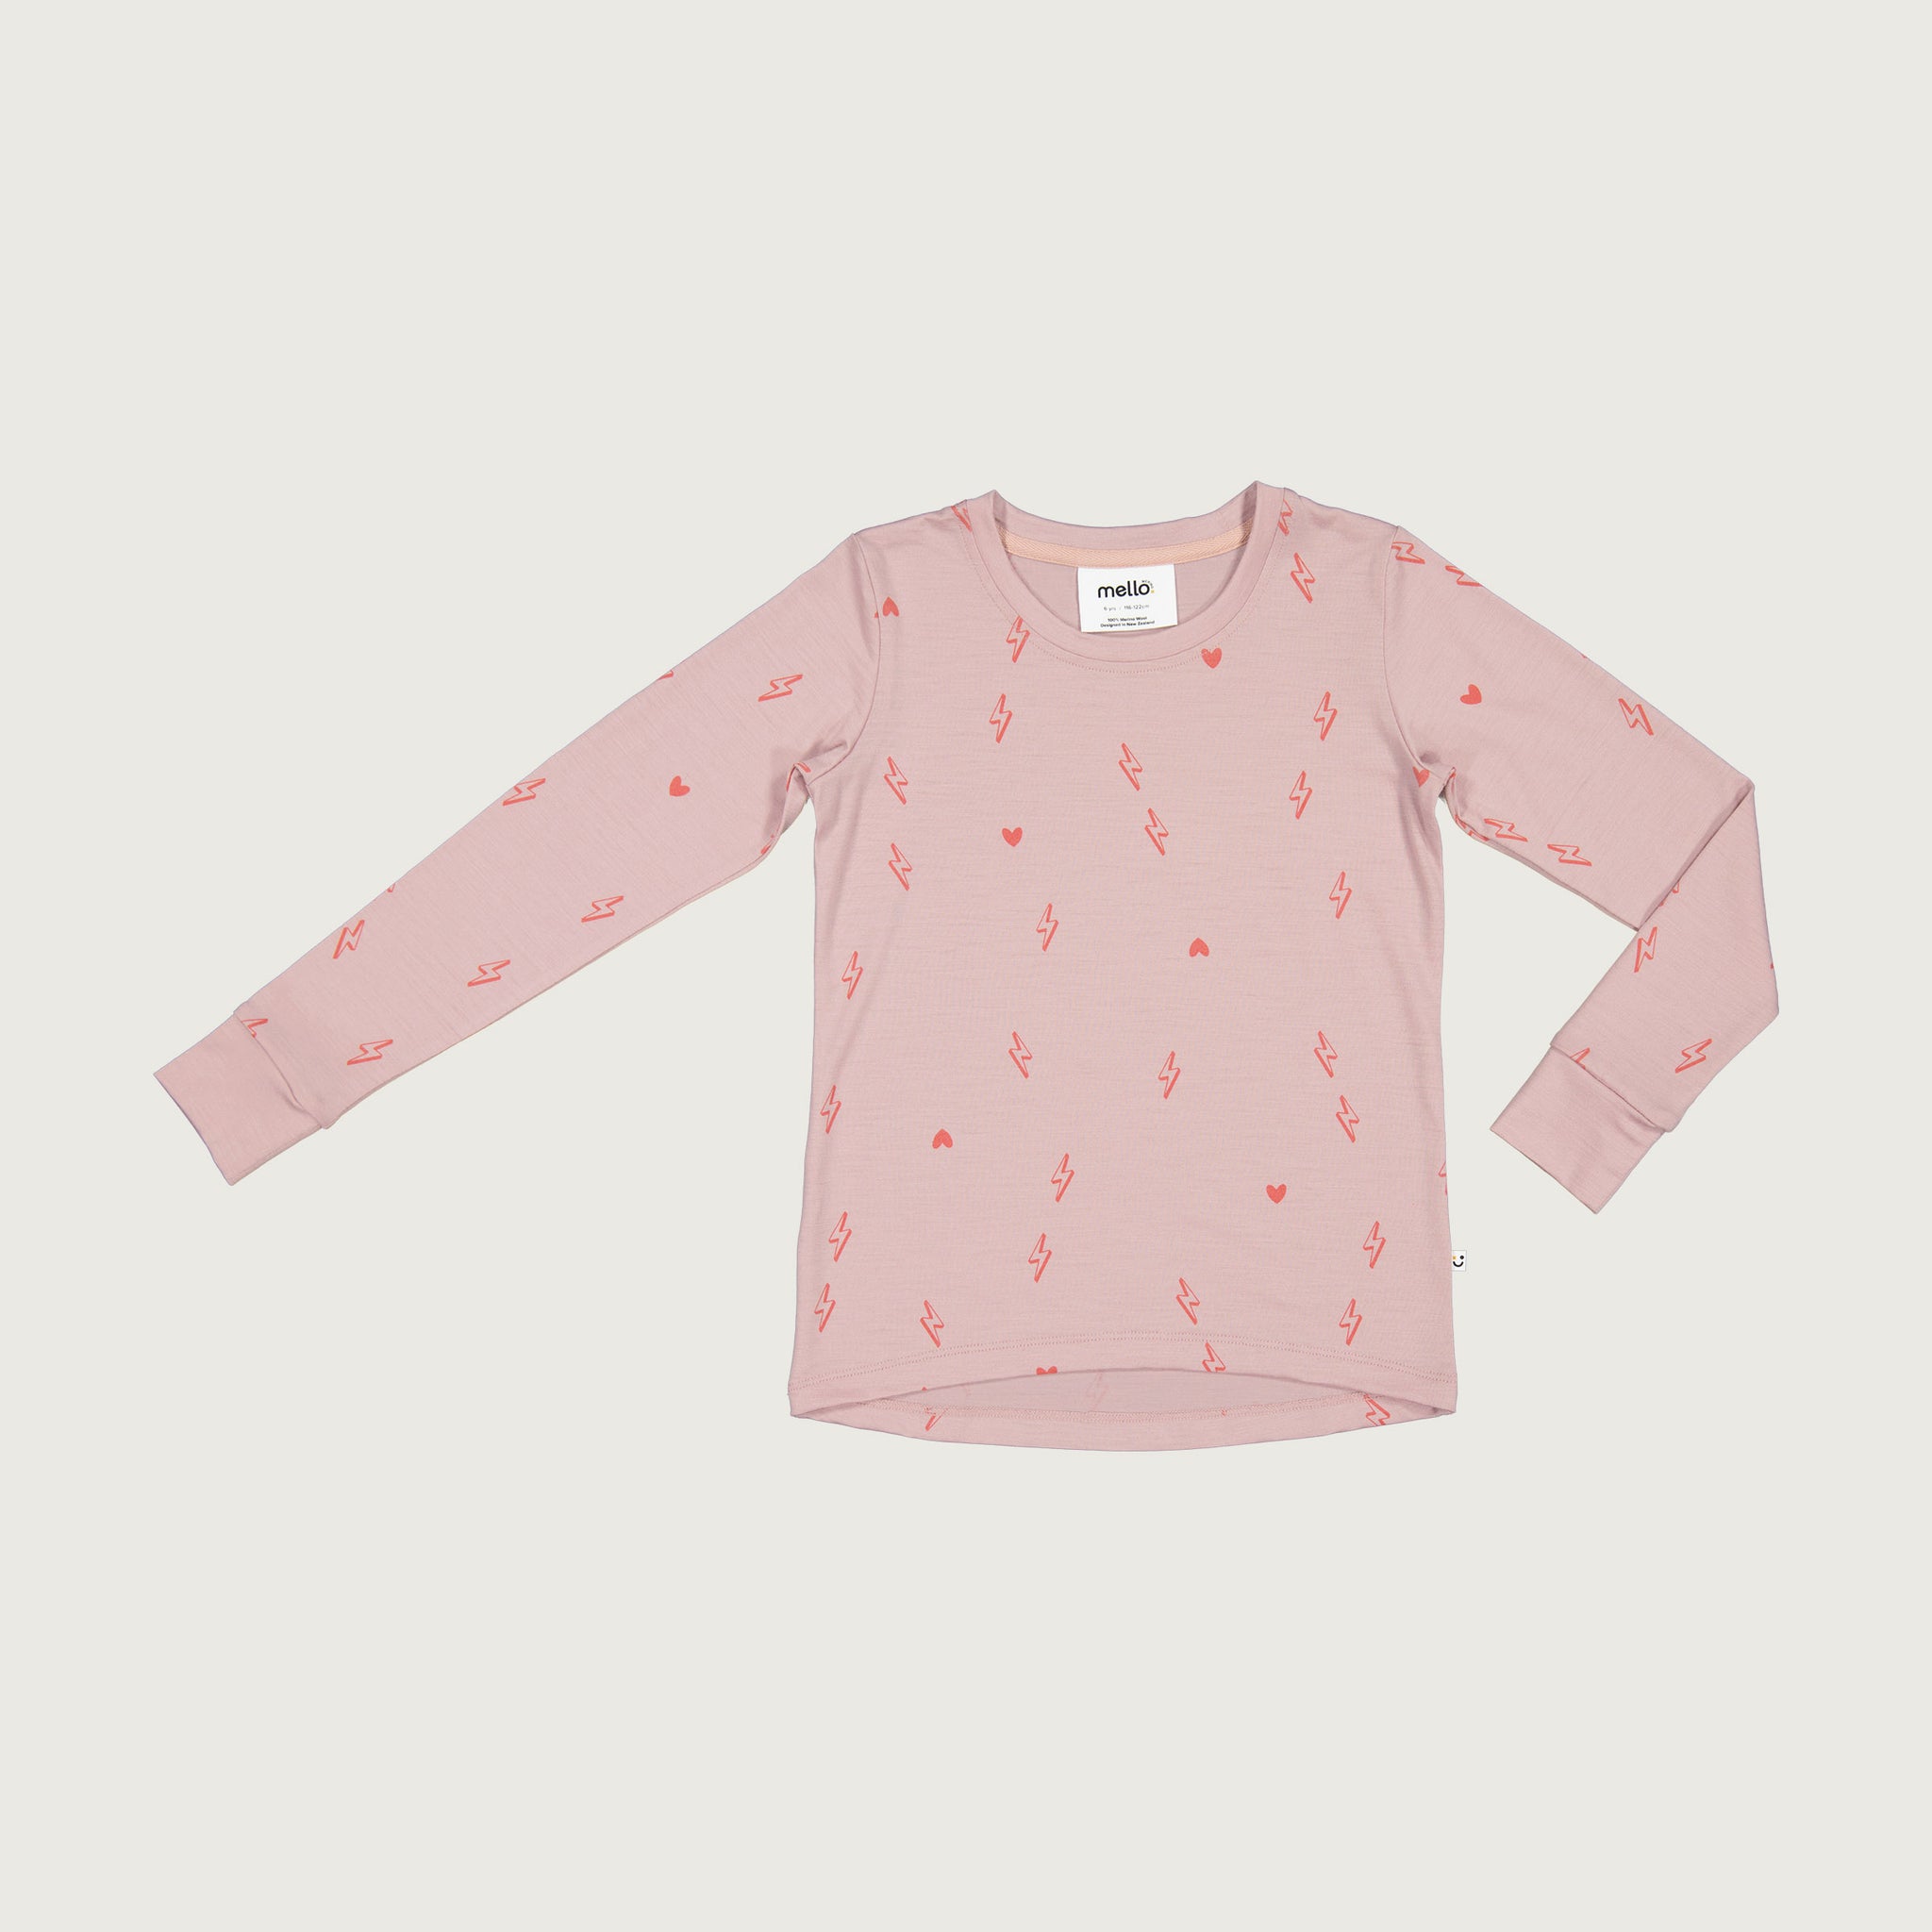 merino long sleev top in blush pink with print